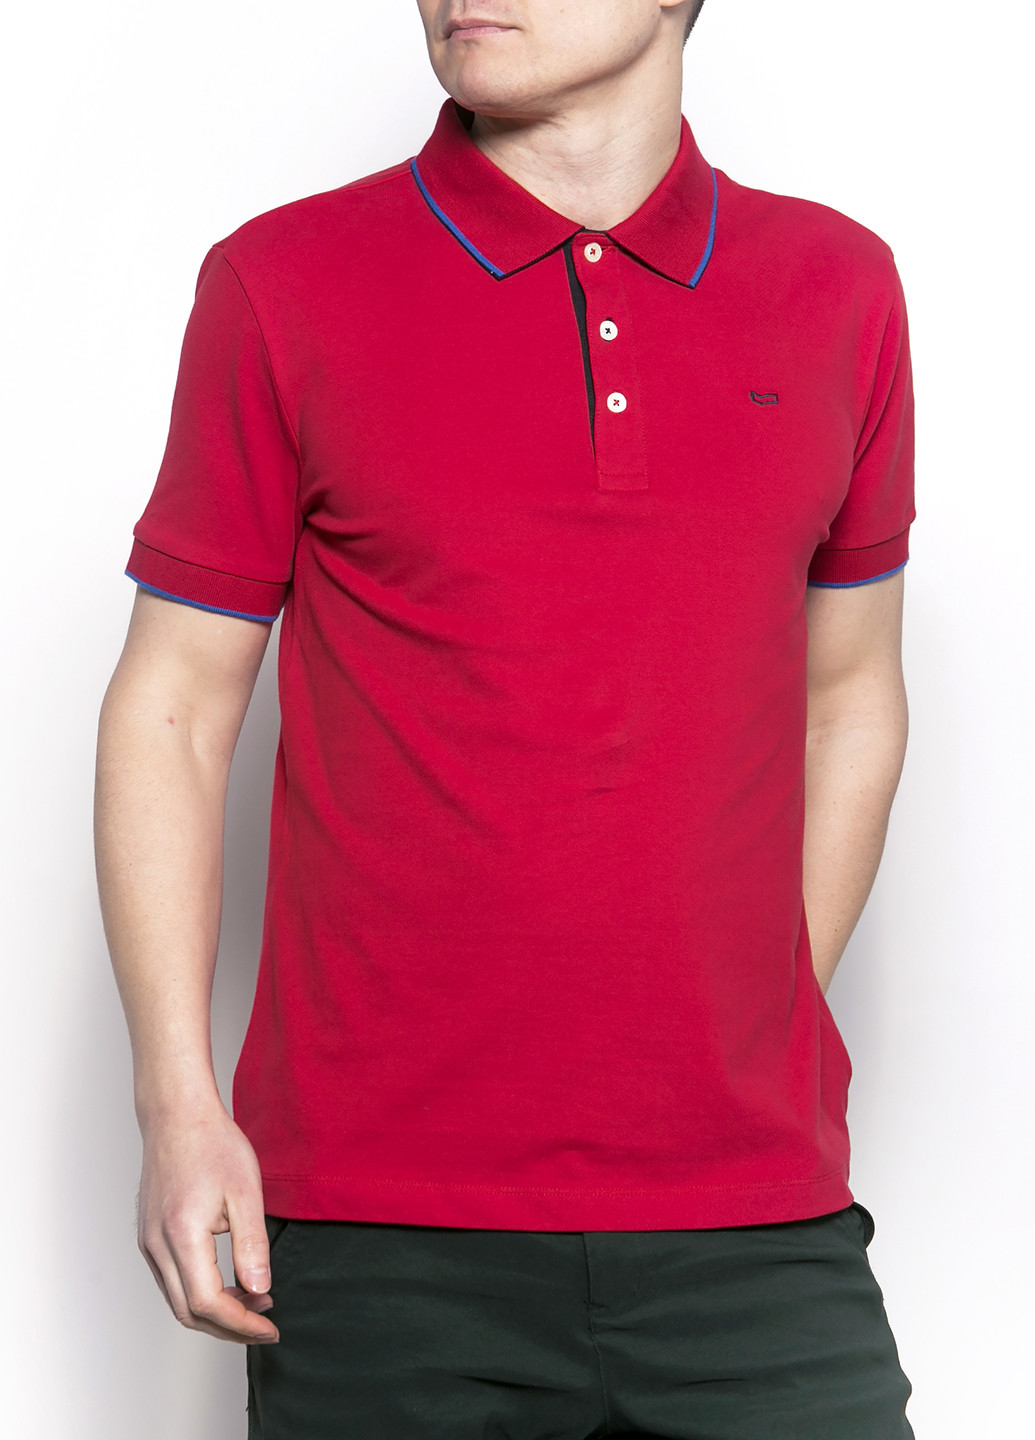 Красная футболка-поло для мужчин Gas однотонная